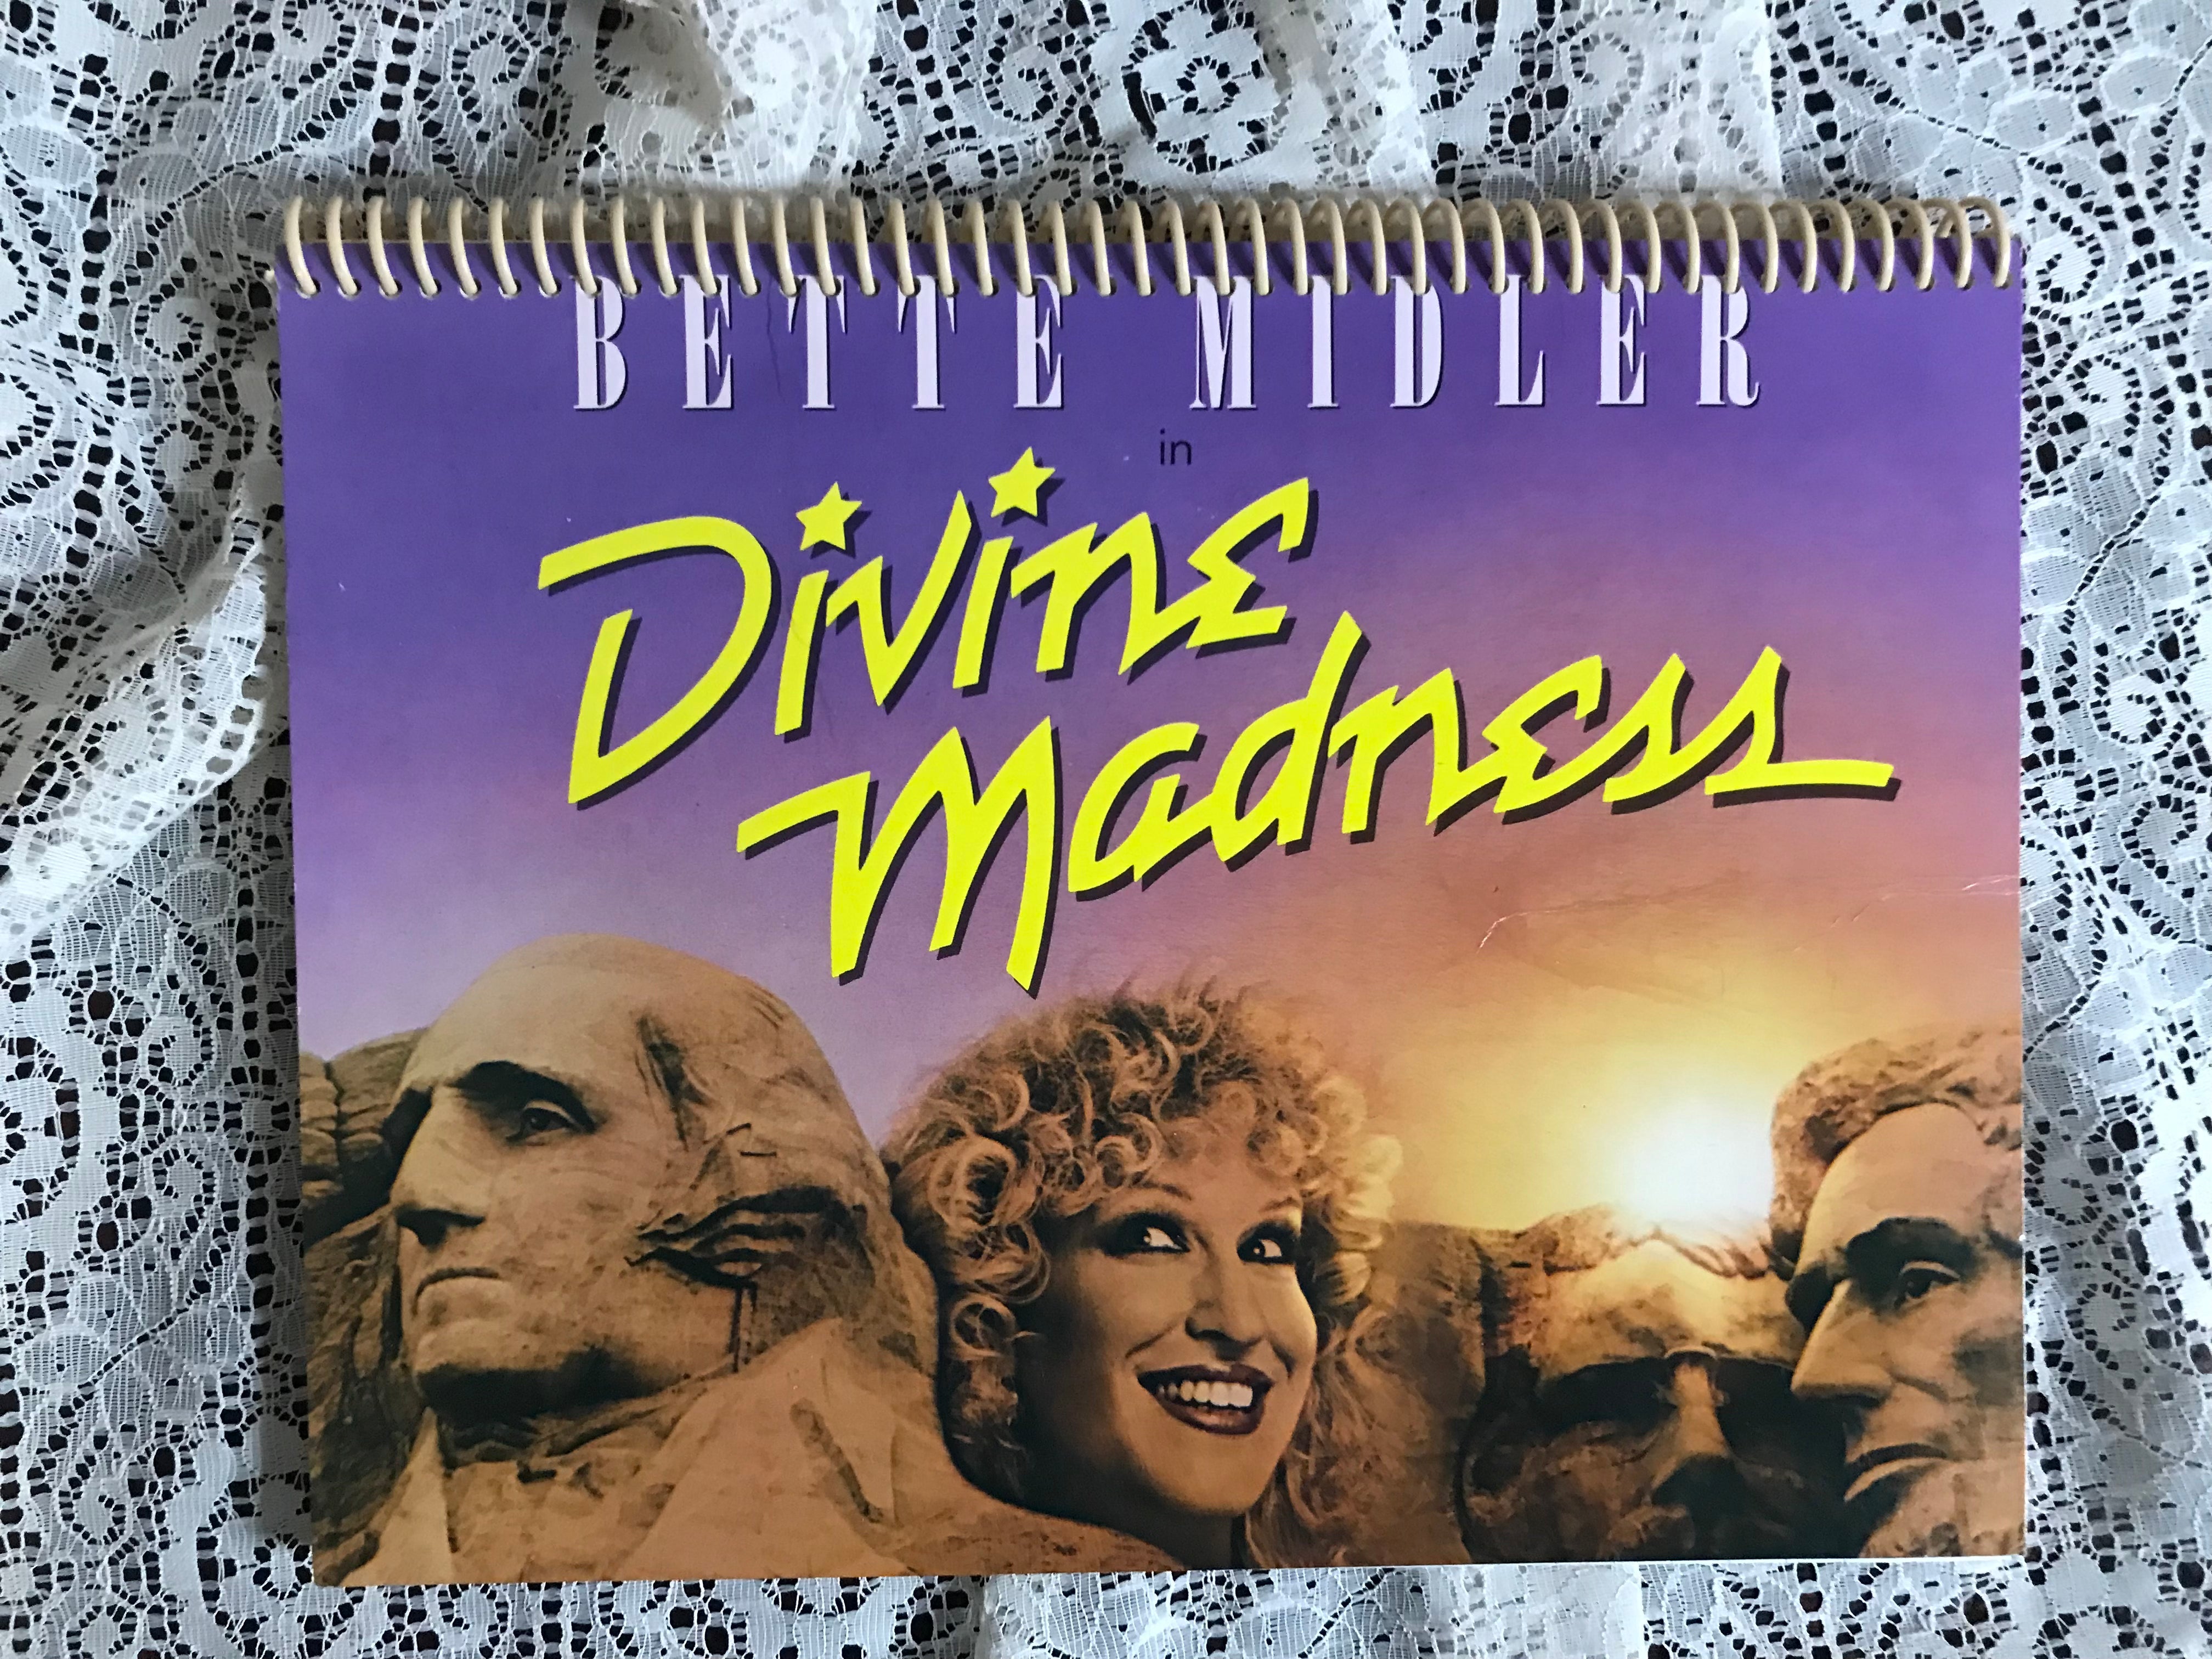 Bette Midler Divine Madness Album Cover Notebook